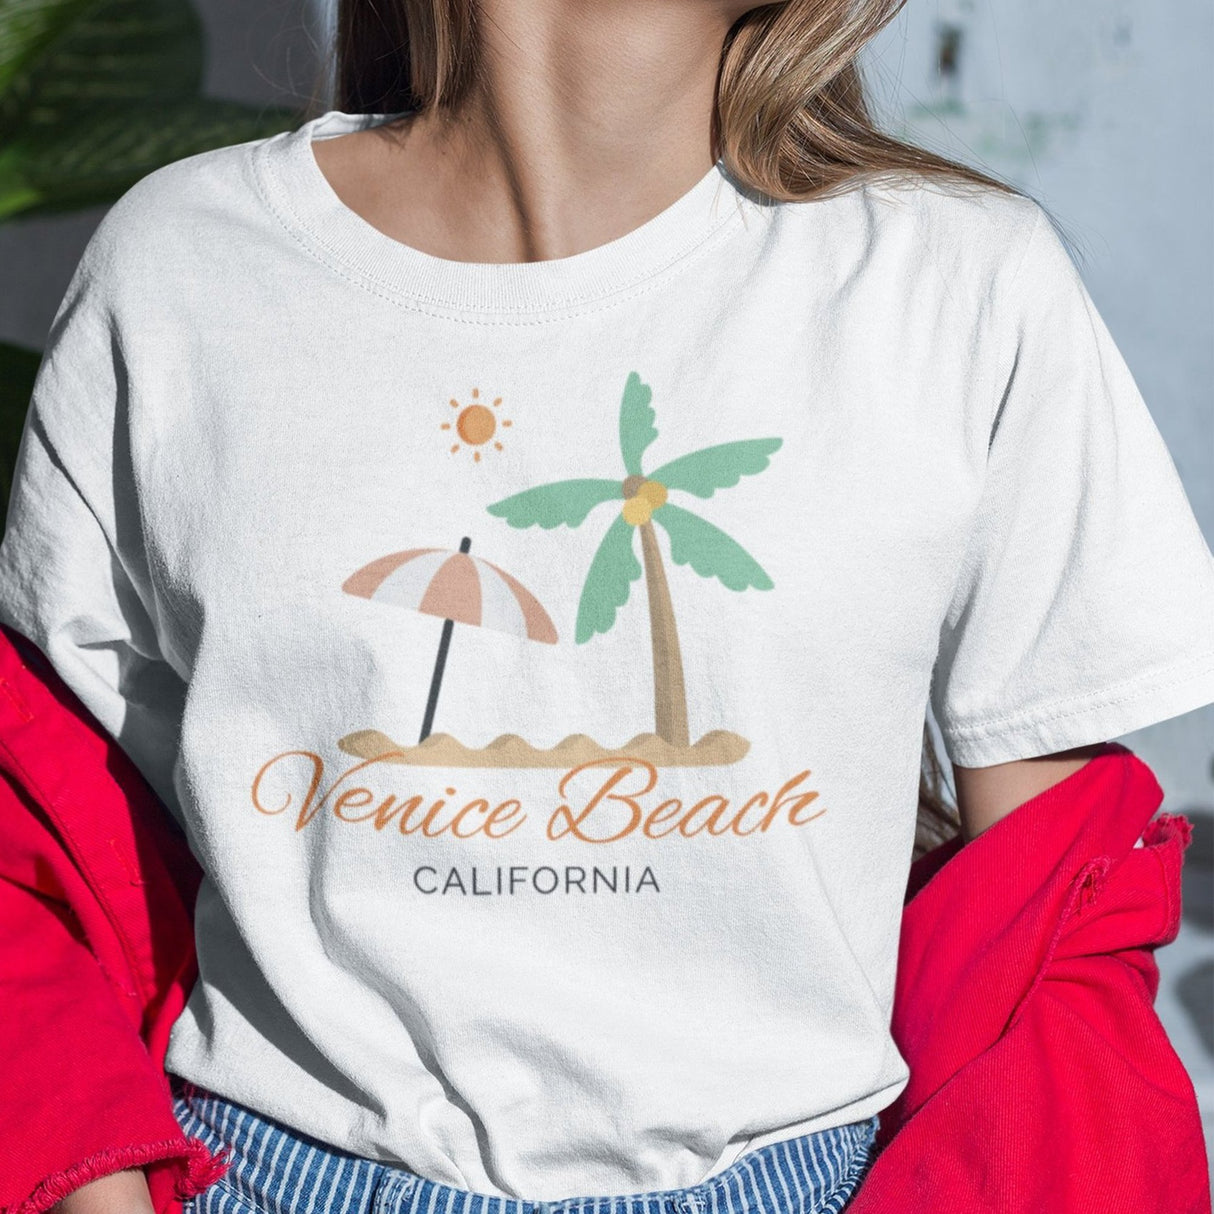 venice-beach-california-beach-tee-venice-t-shirt-santa-monica-tee-t-shirt-tee#color_white